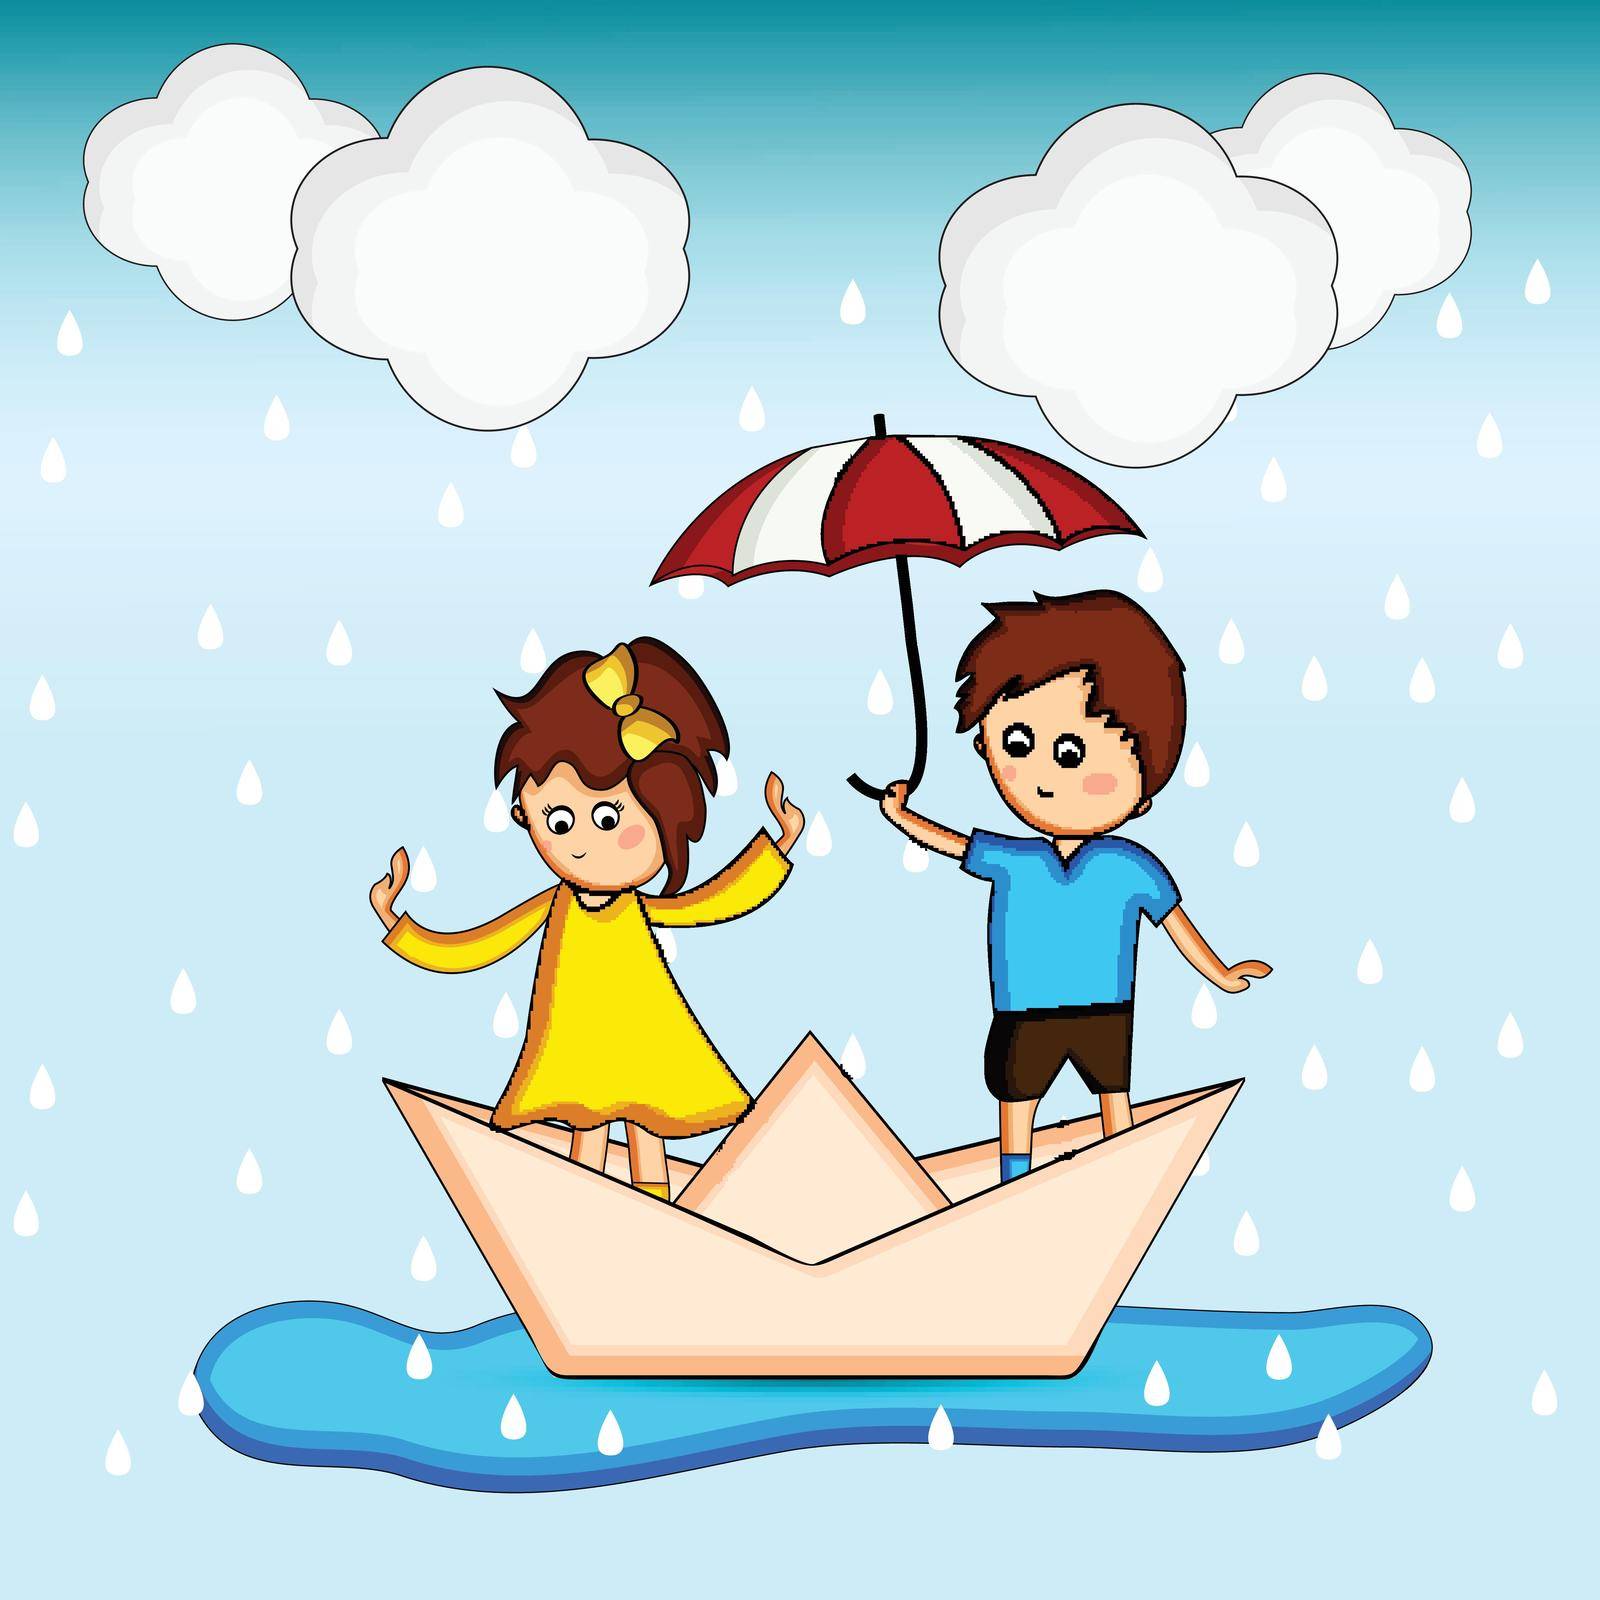 illustration of elements of Monsoon Season background